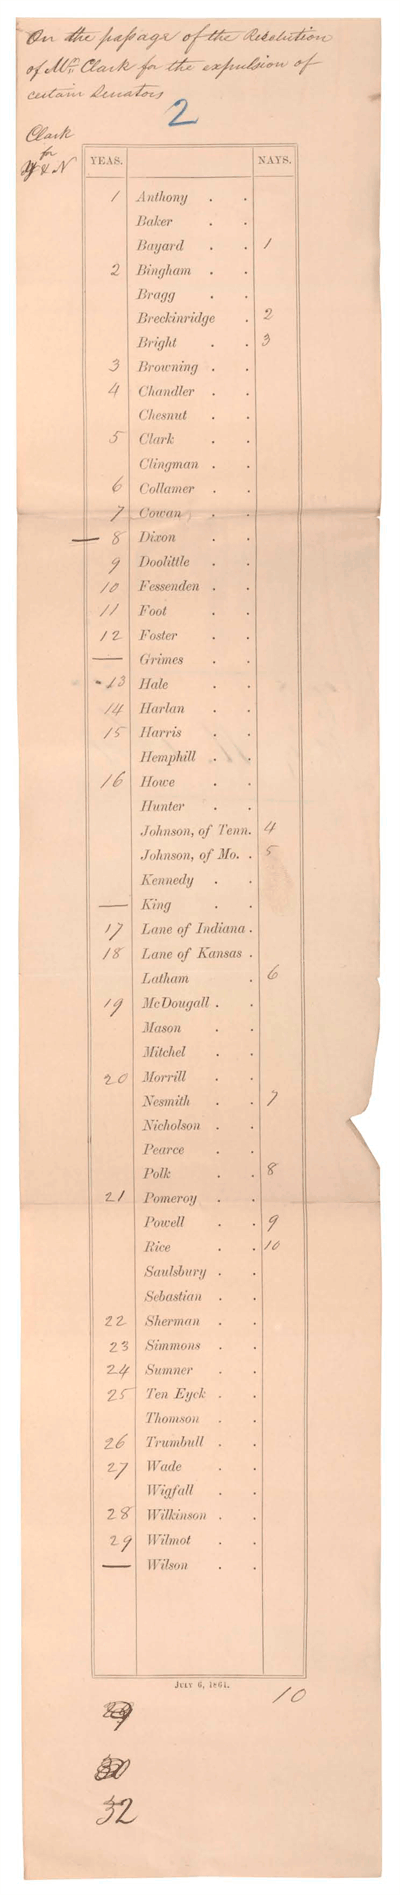 July 11, 1861: Senate Expels Ten Souther Members. Expulsion Tallies.